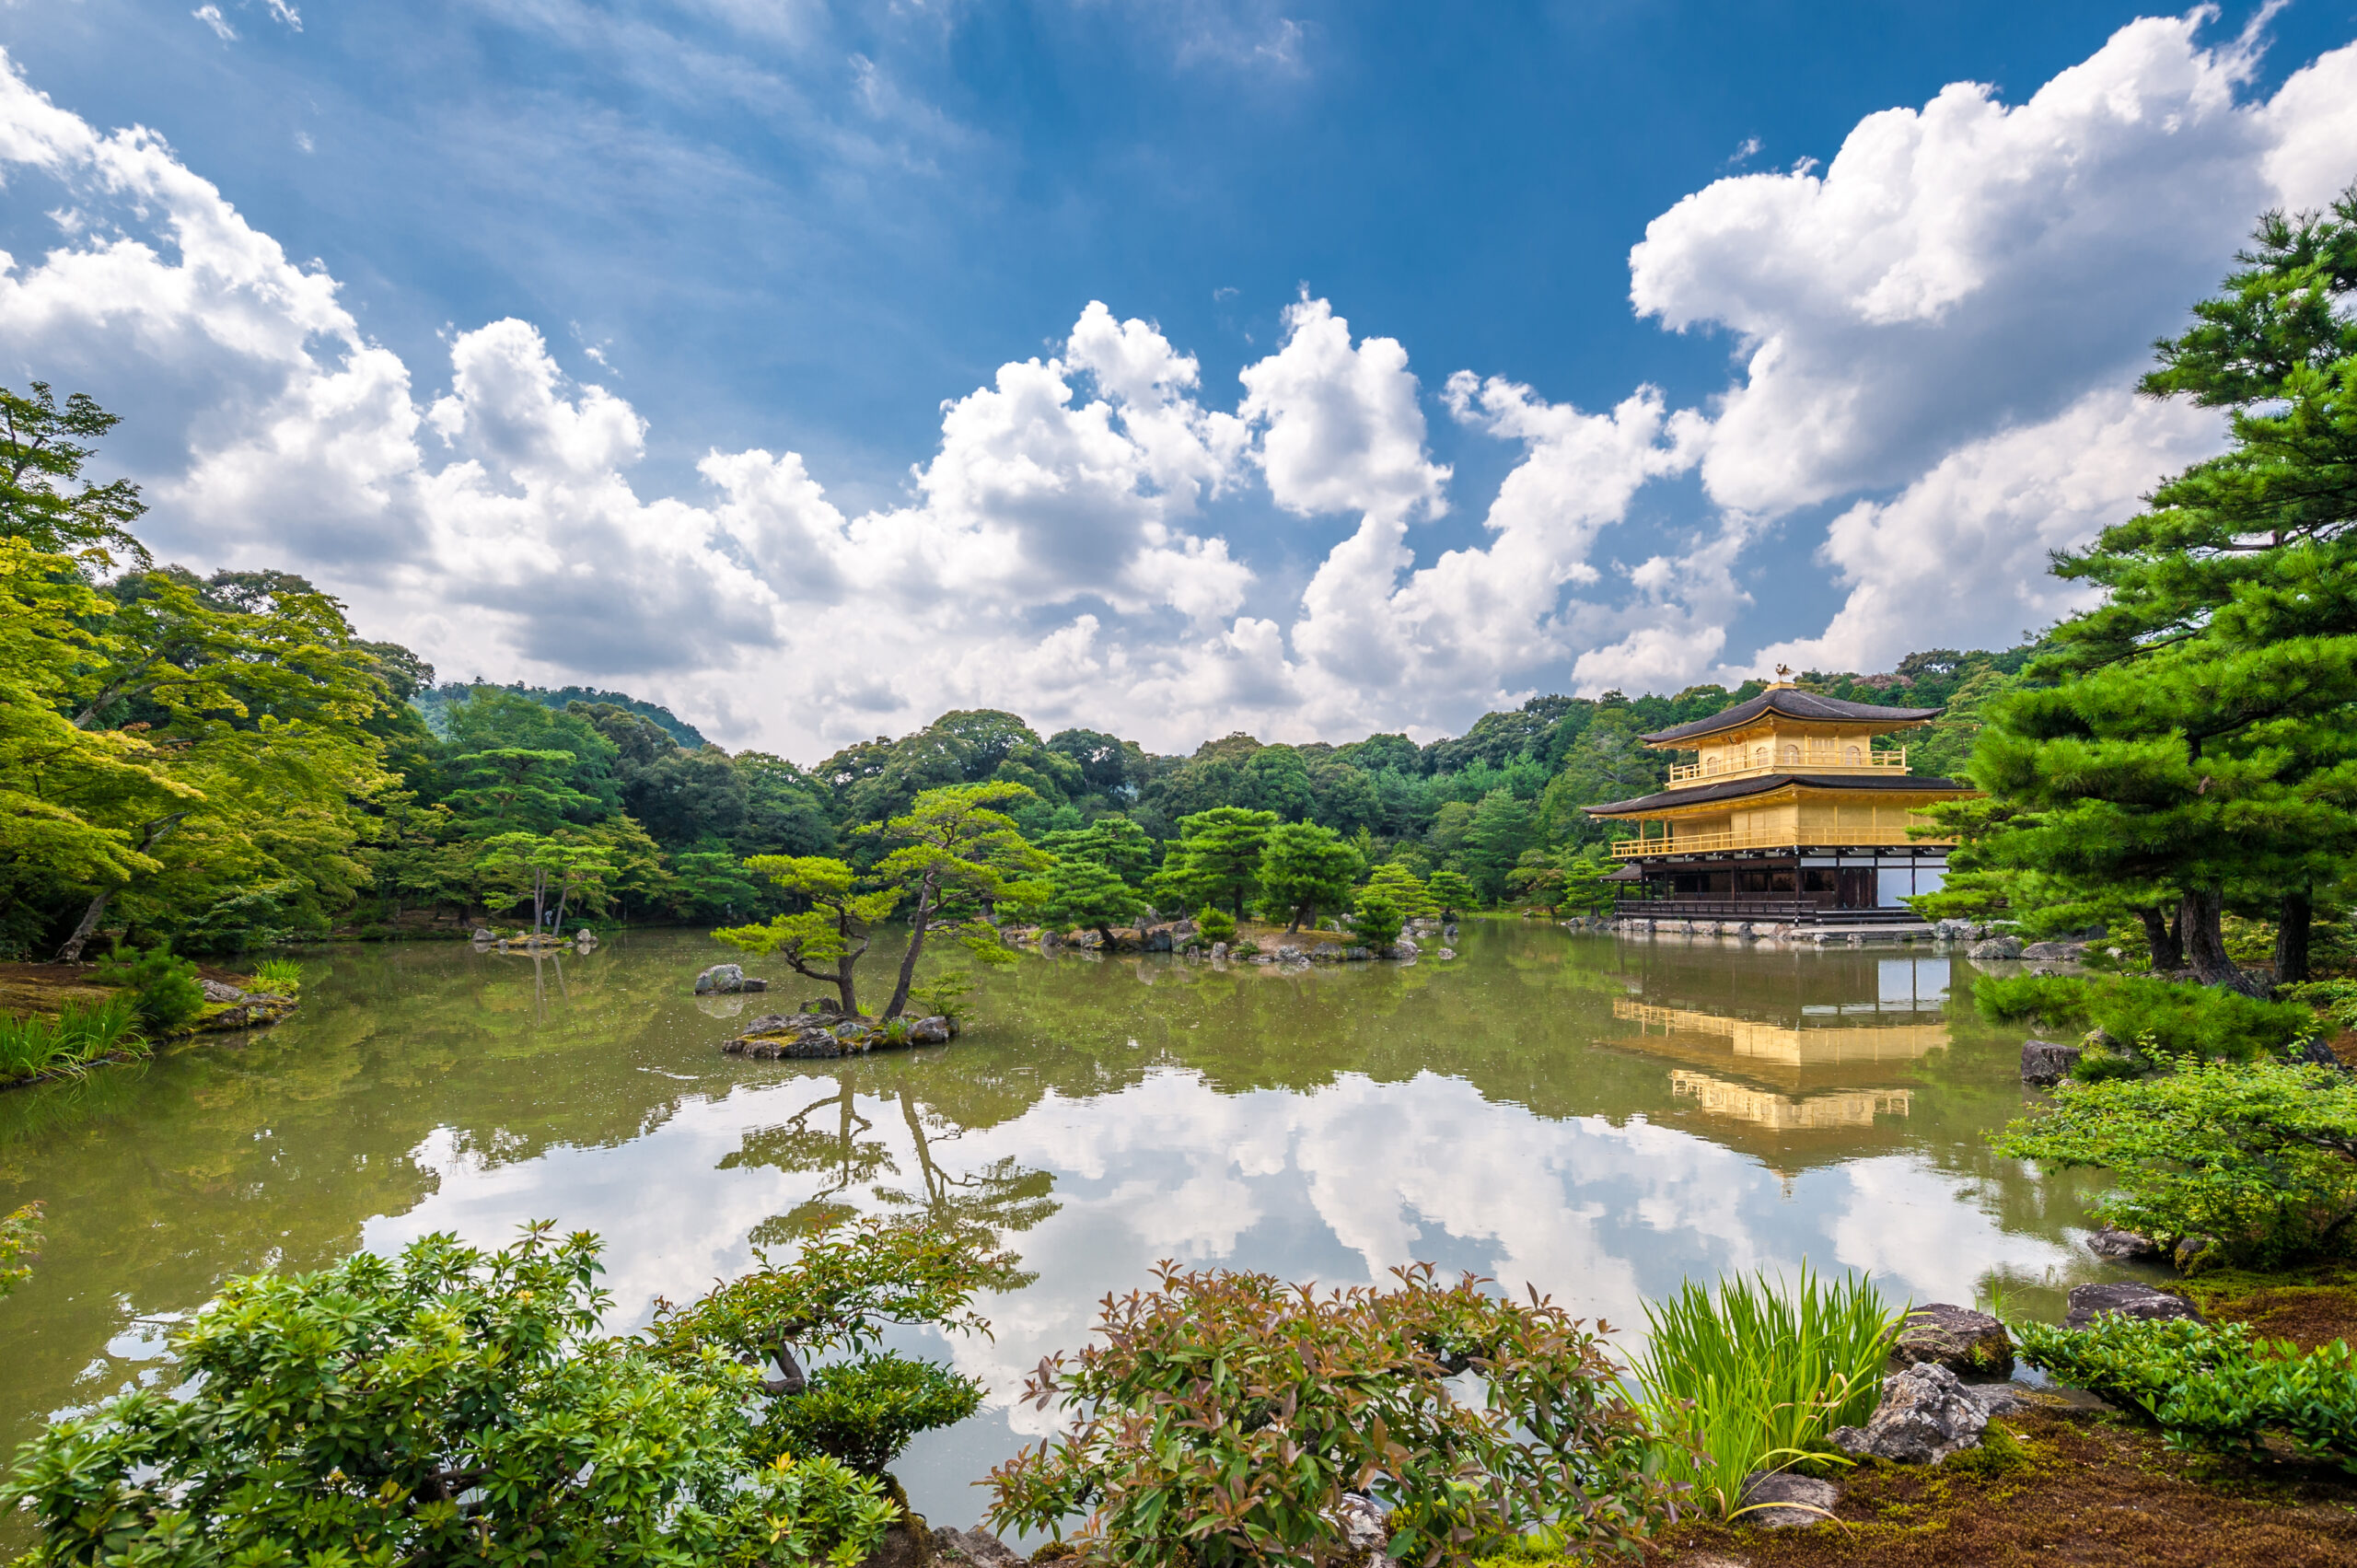 Exploring the enchanting Beauty of Kyoto